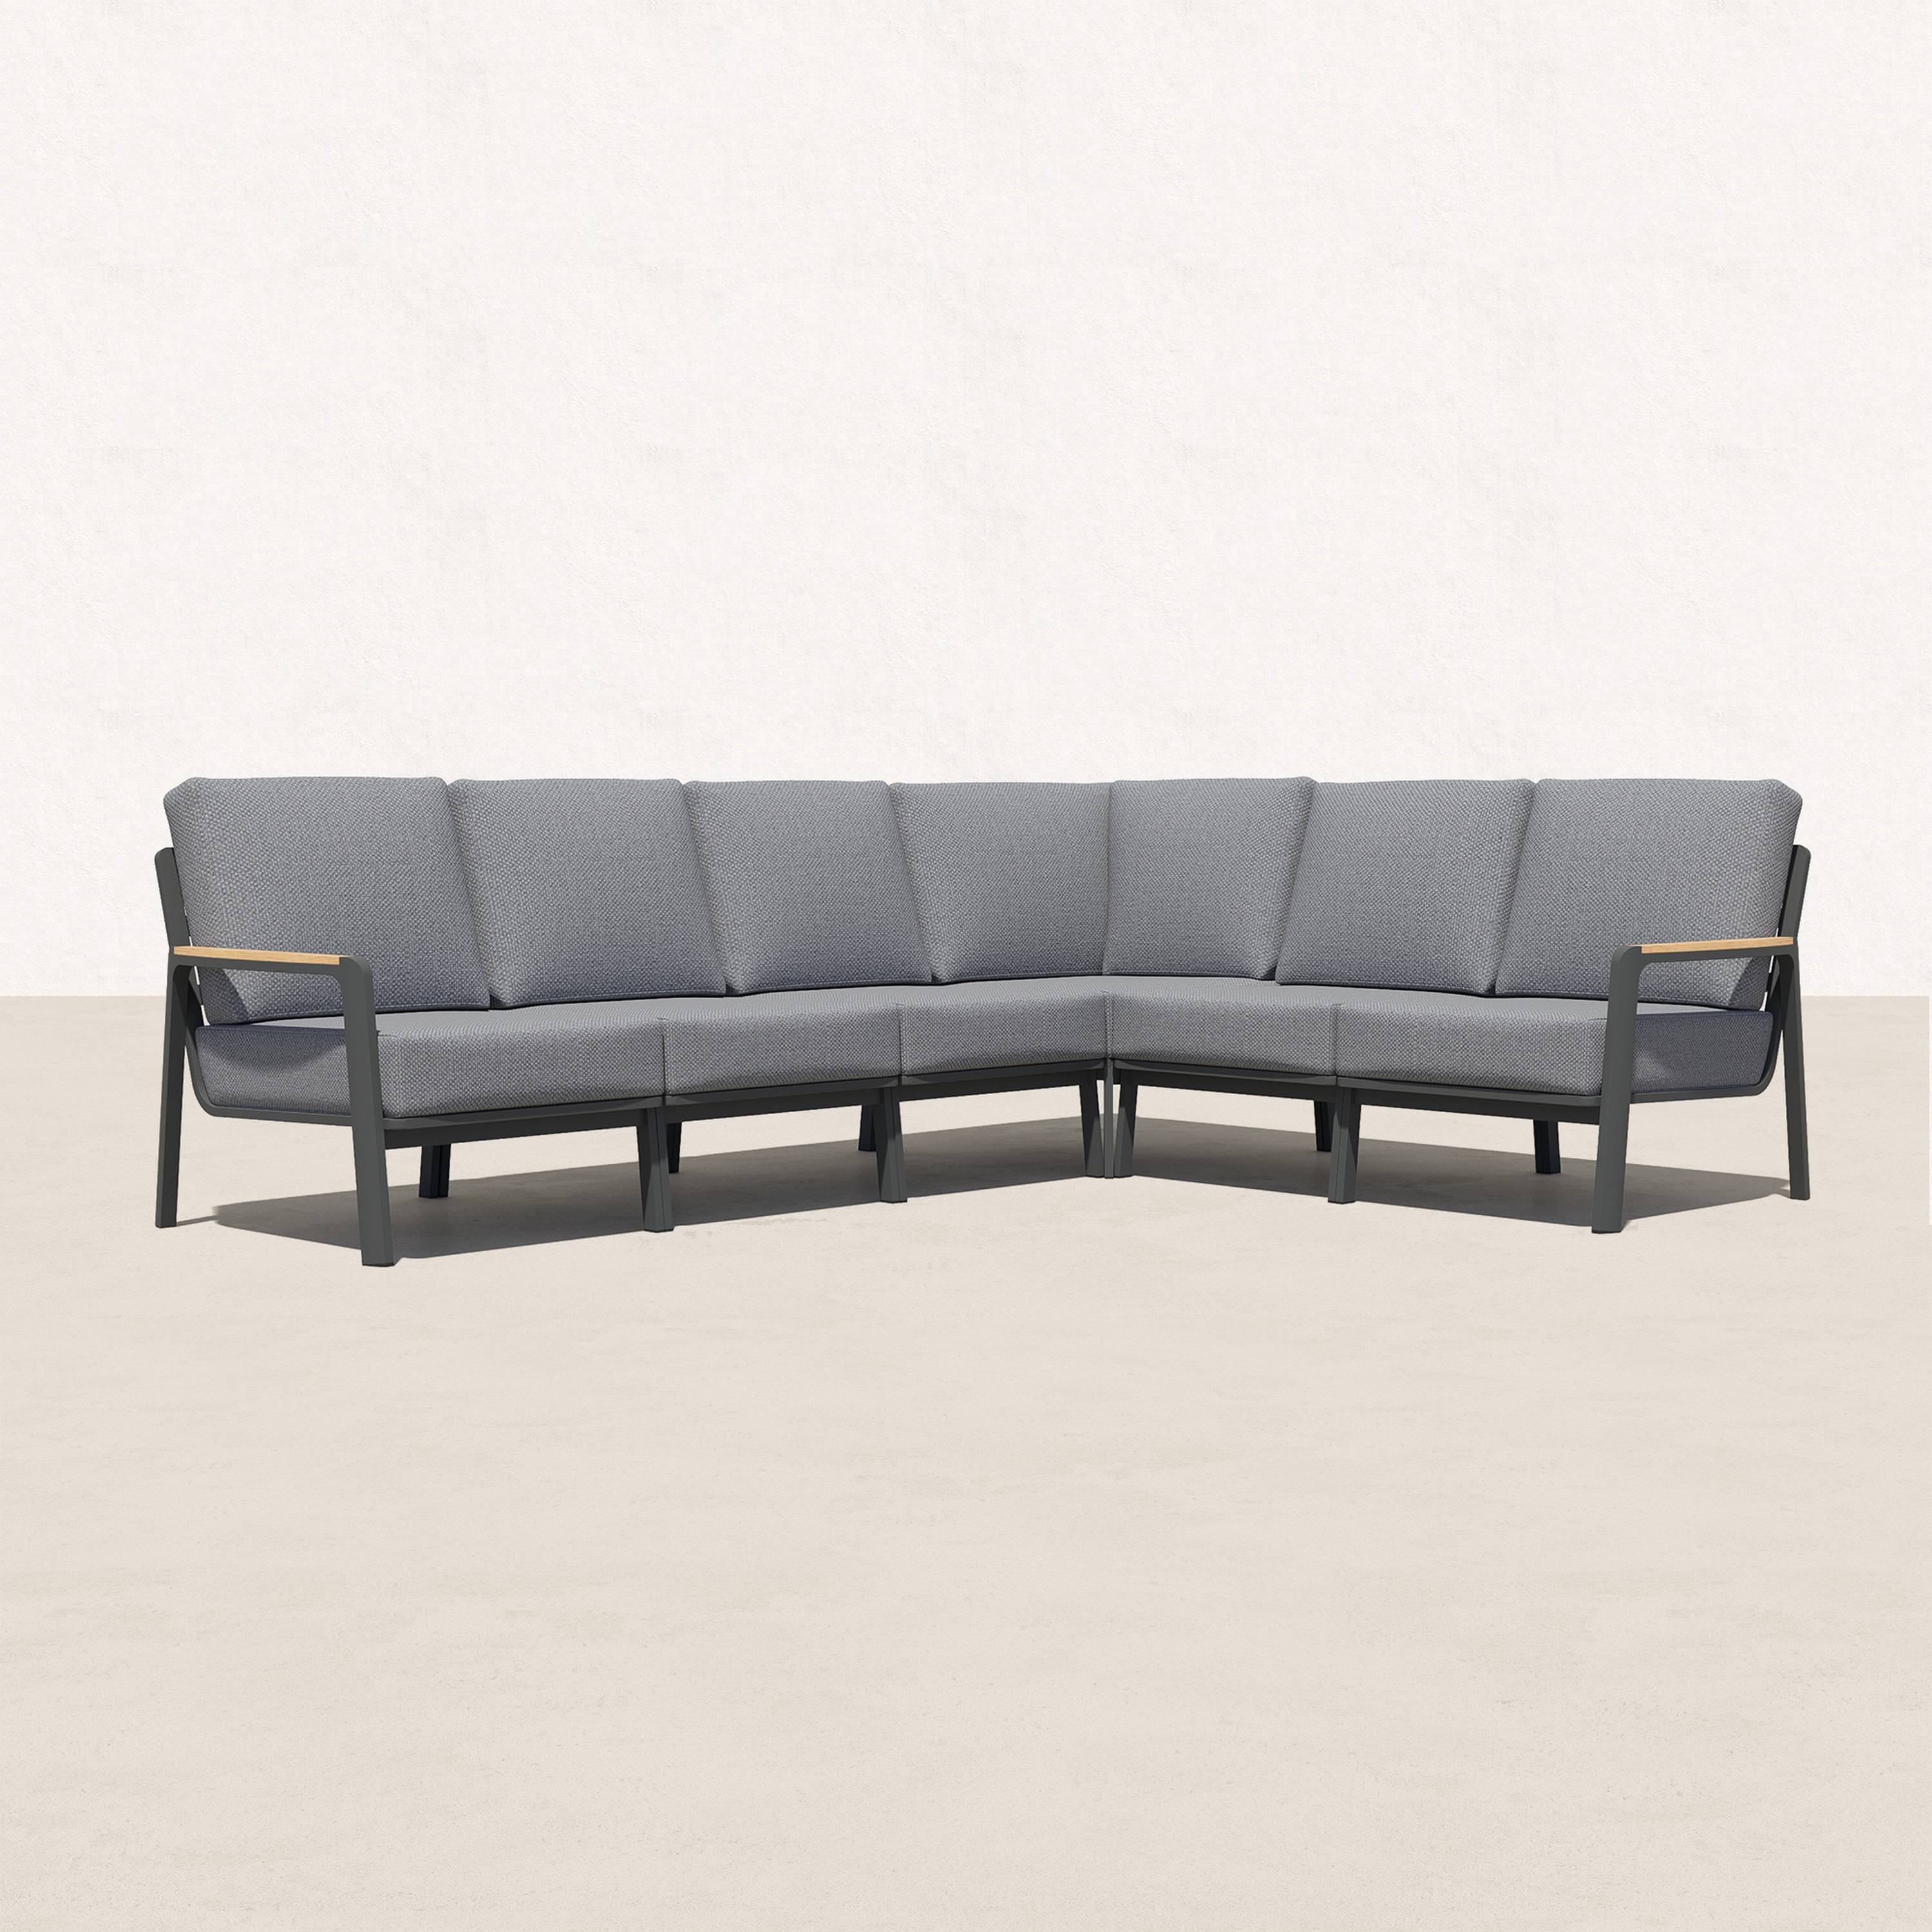 Orion Teak Outdoor L Sectional - 6 Seat -Baeryon Furniture